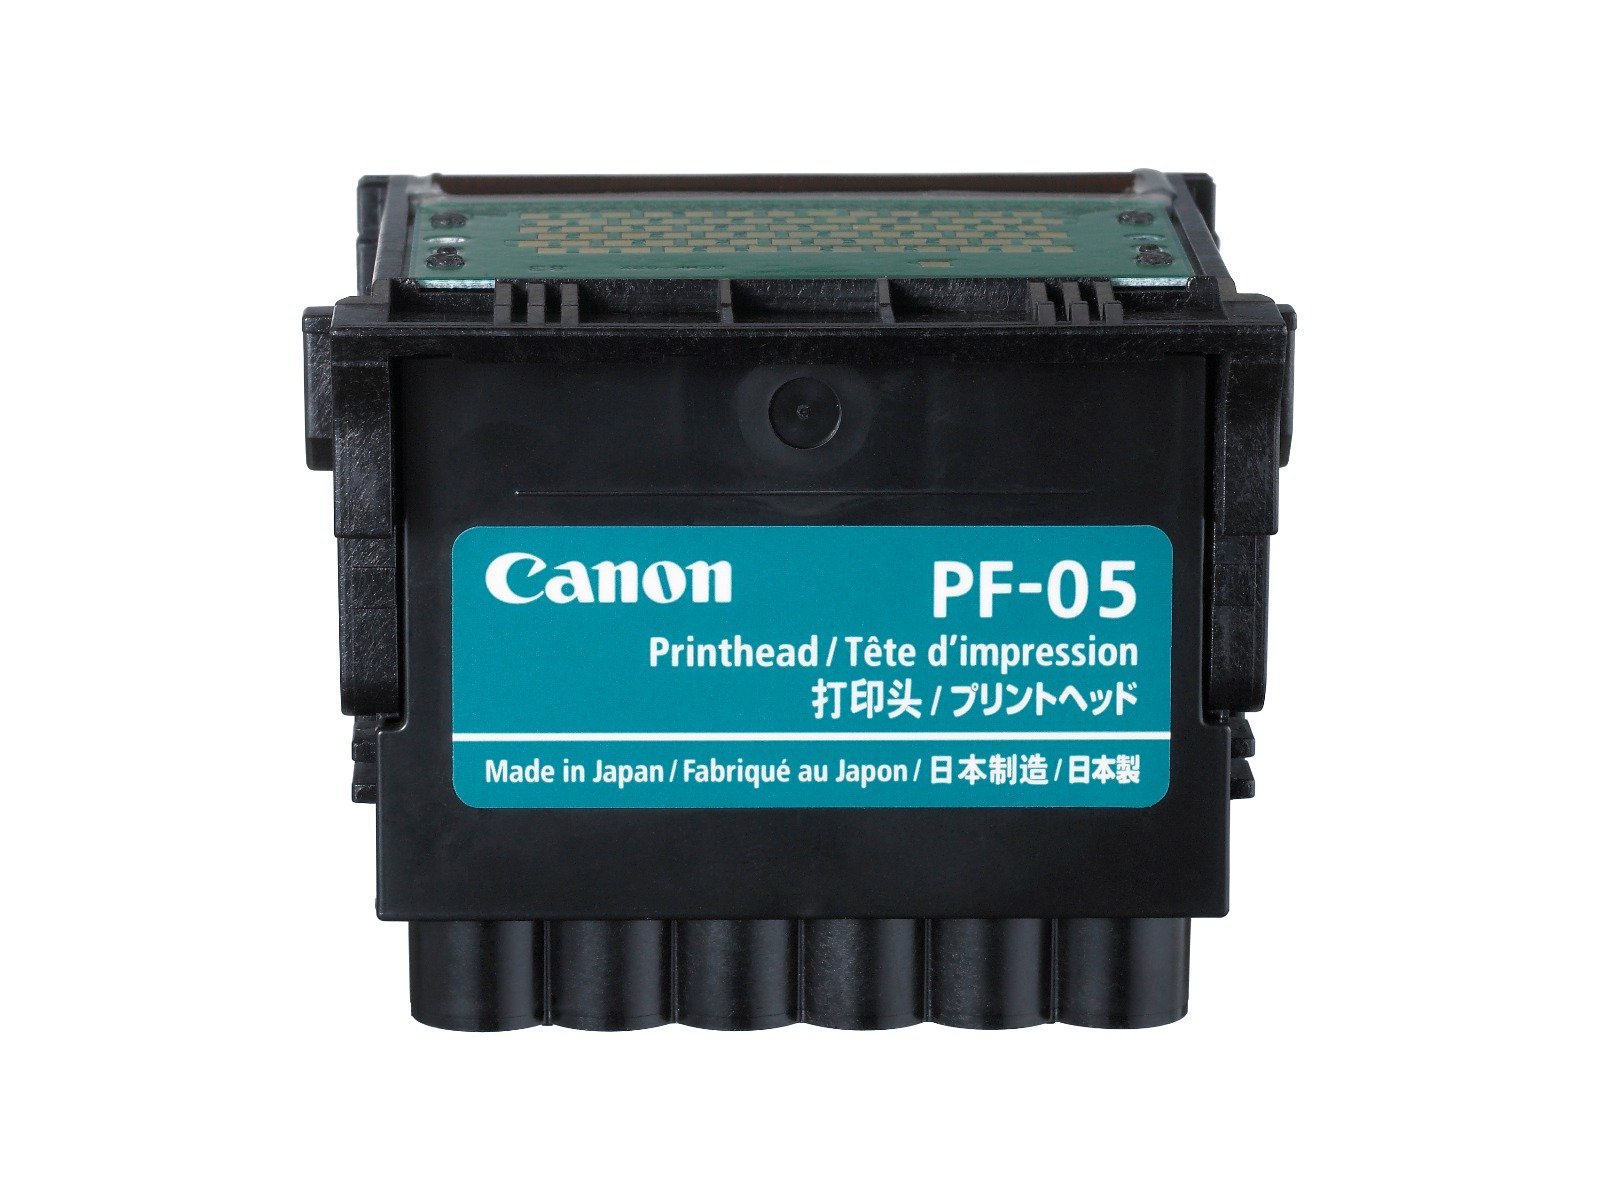 Печатающая головка Canon PF-05 печатающая головка printhead pf 06 2352c001